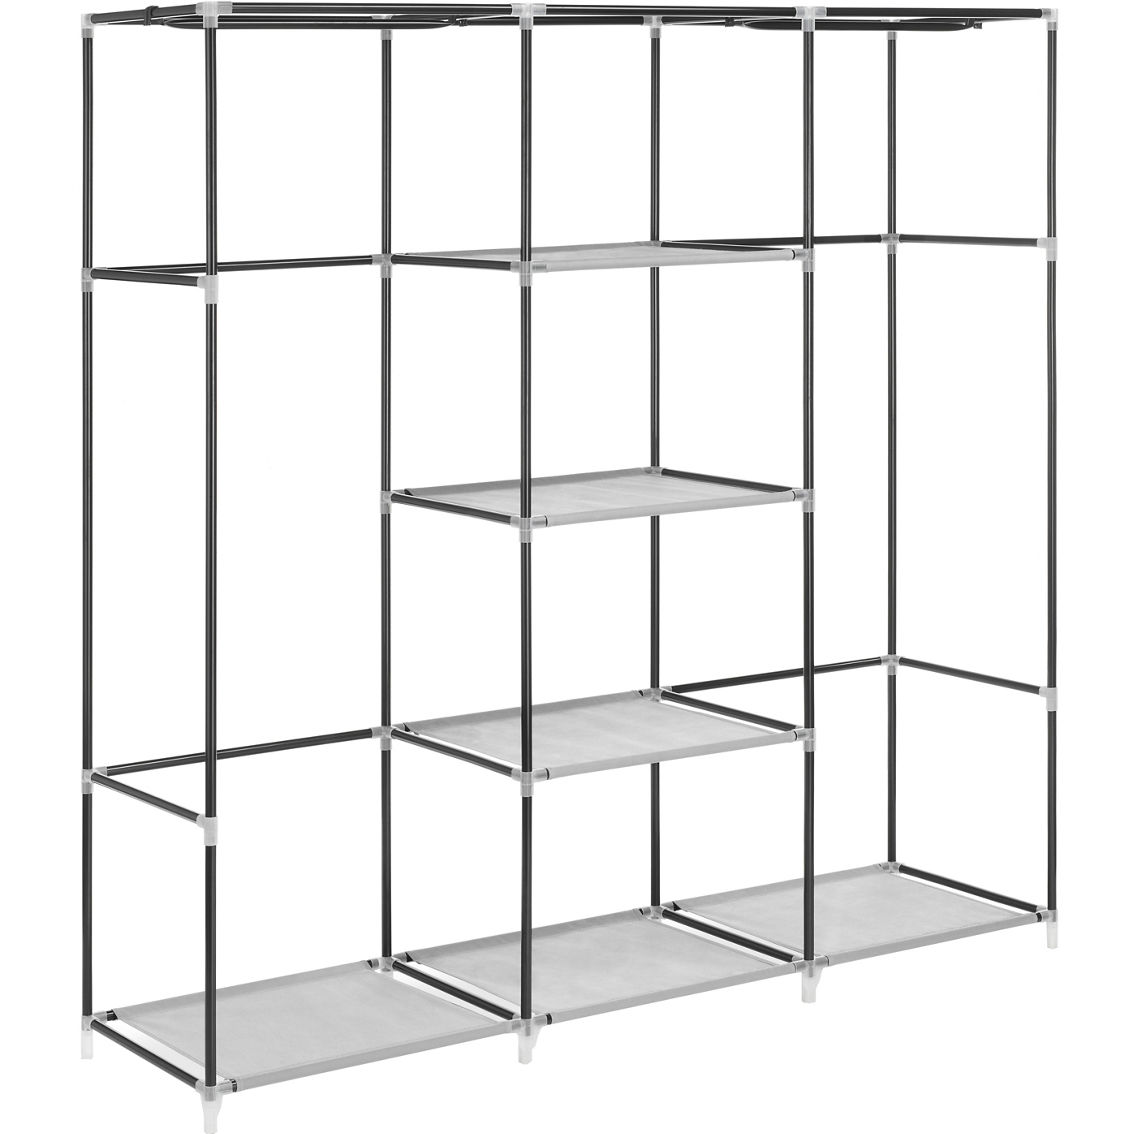 Whitmor Covered Wardrobe with Storage Shelves - Image 3 of 4